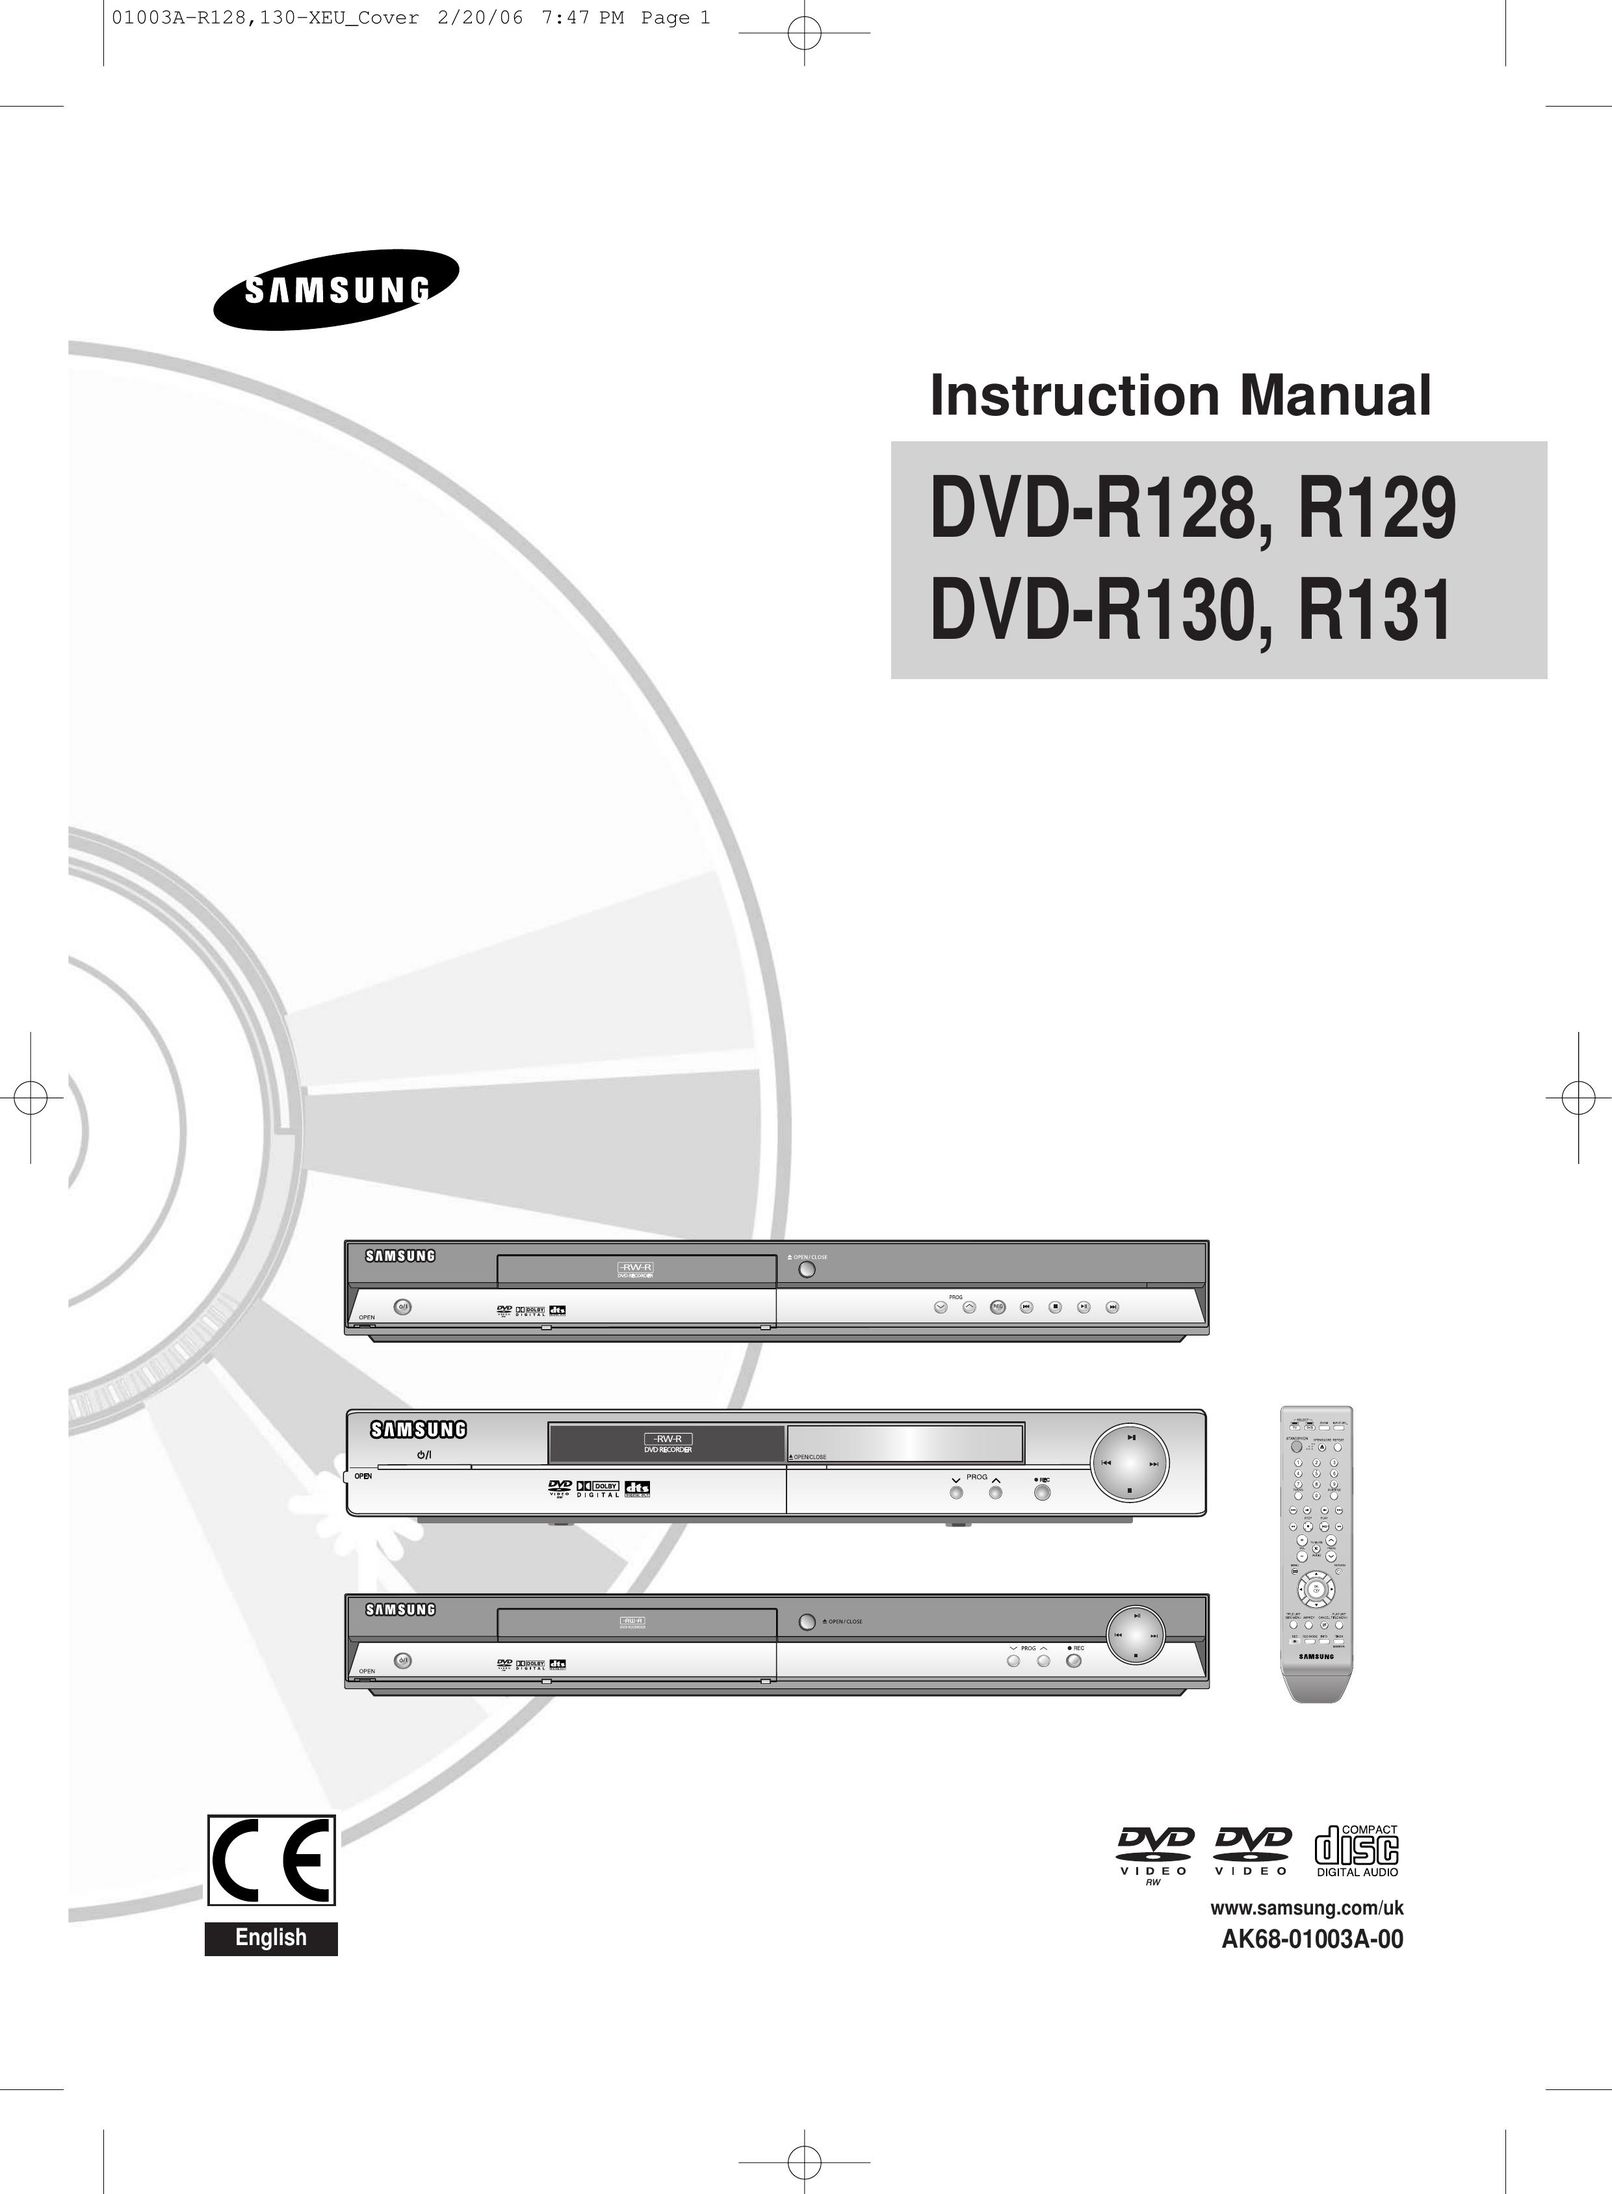 Samsung R129 DVD-R130 DVD Recorder User Manual